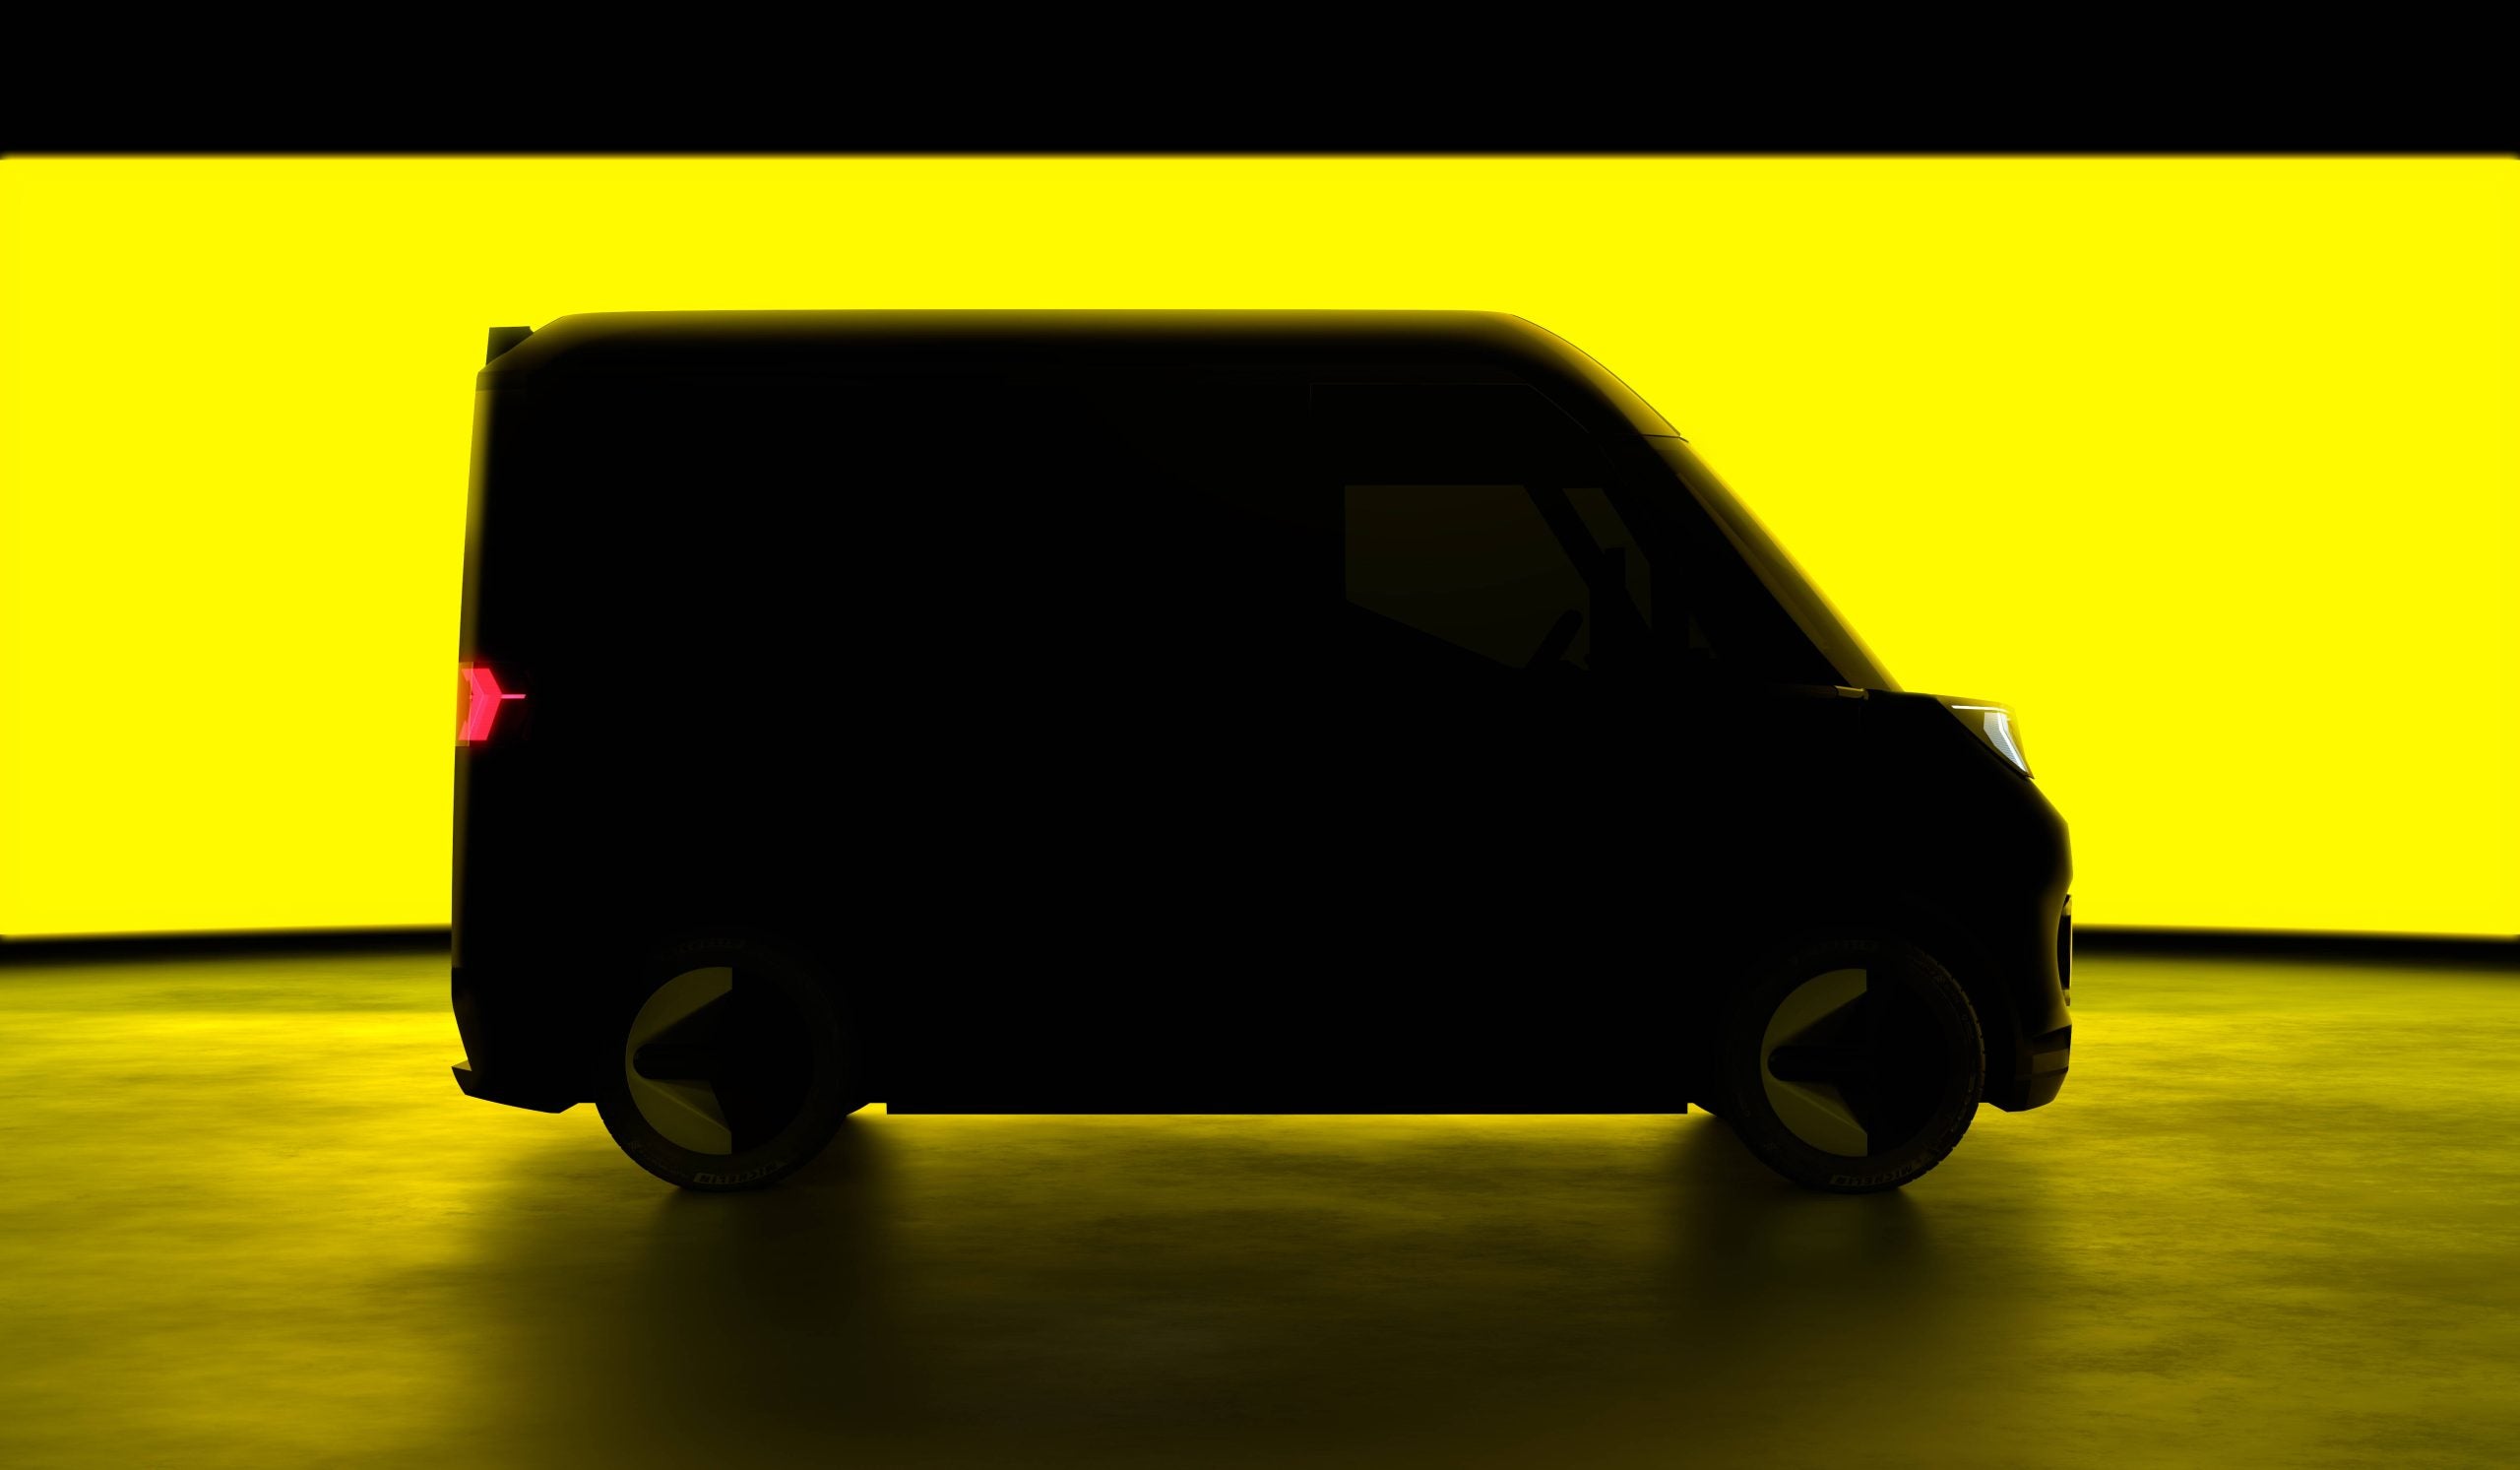 New Renault Master van offers more EV options